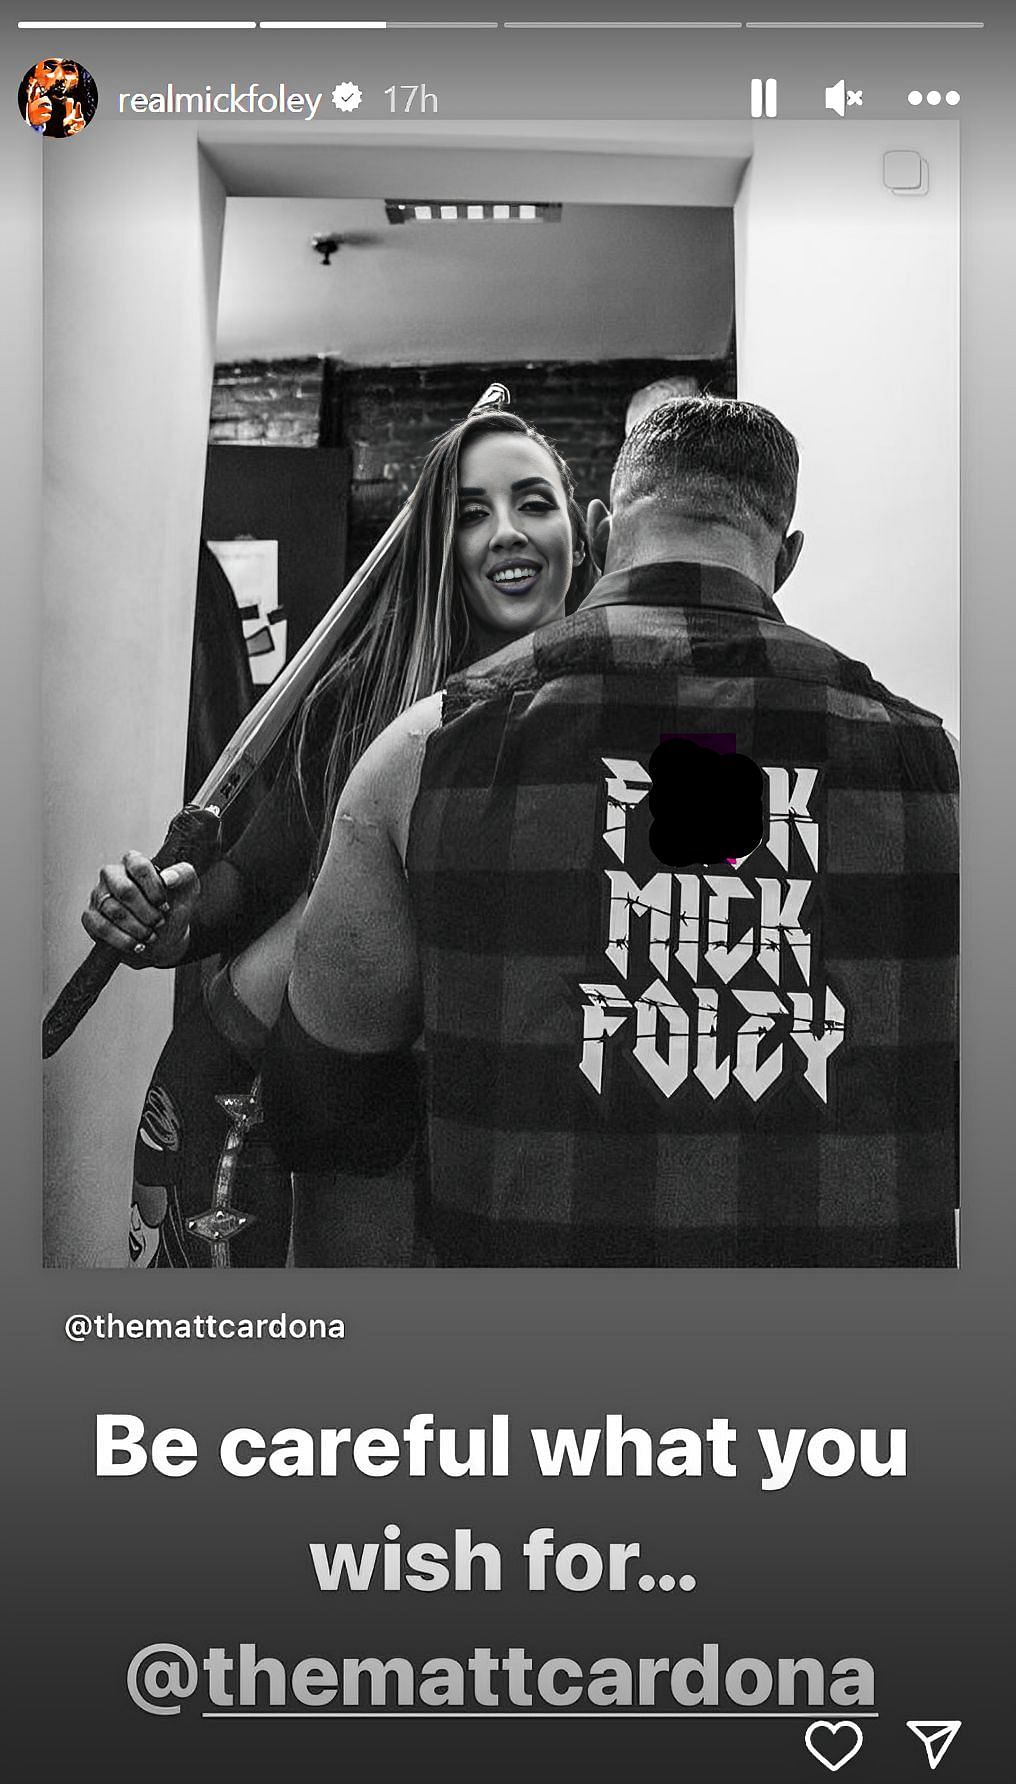 Mick Foley responds to Matt Cardona on Instagram